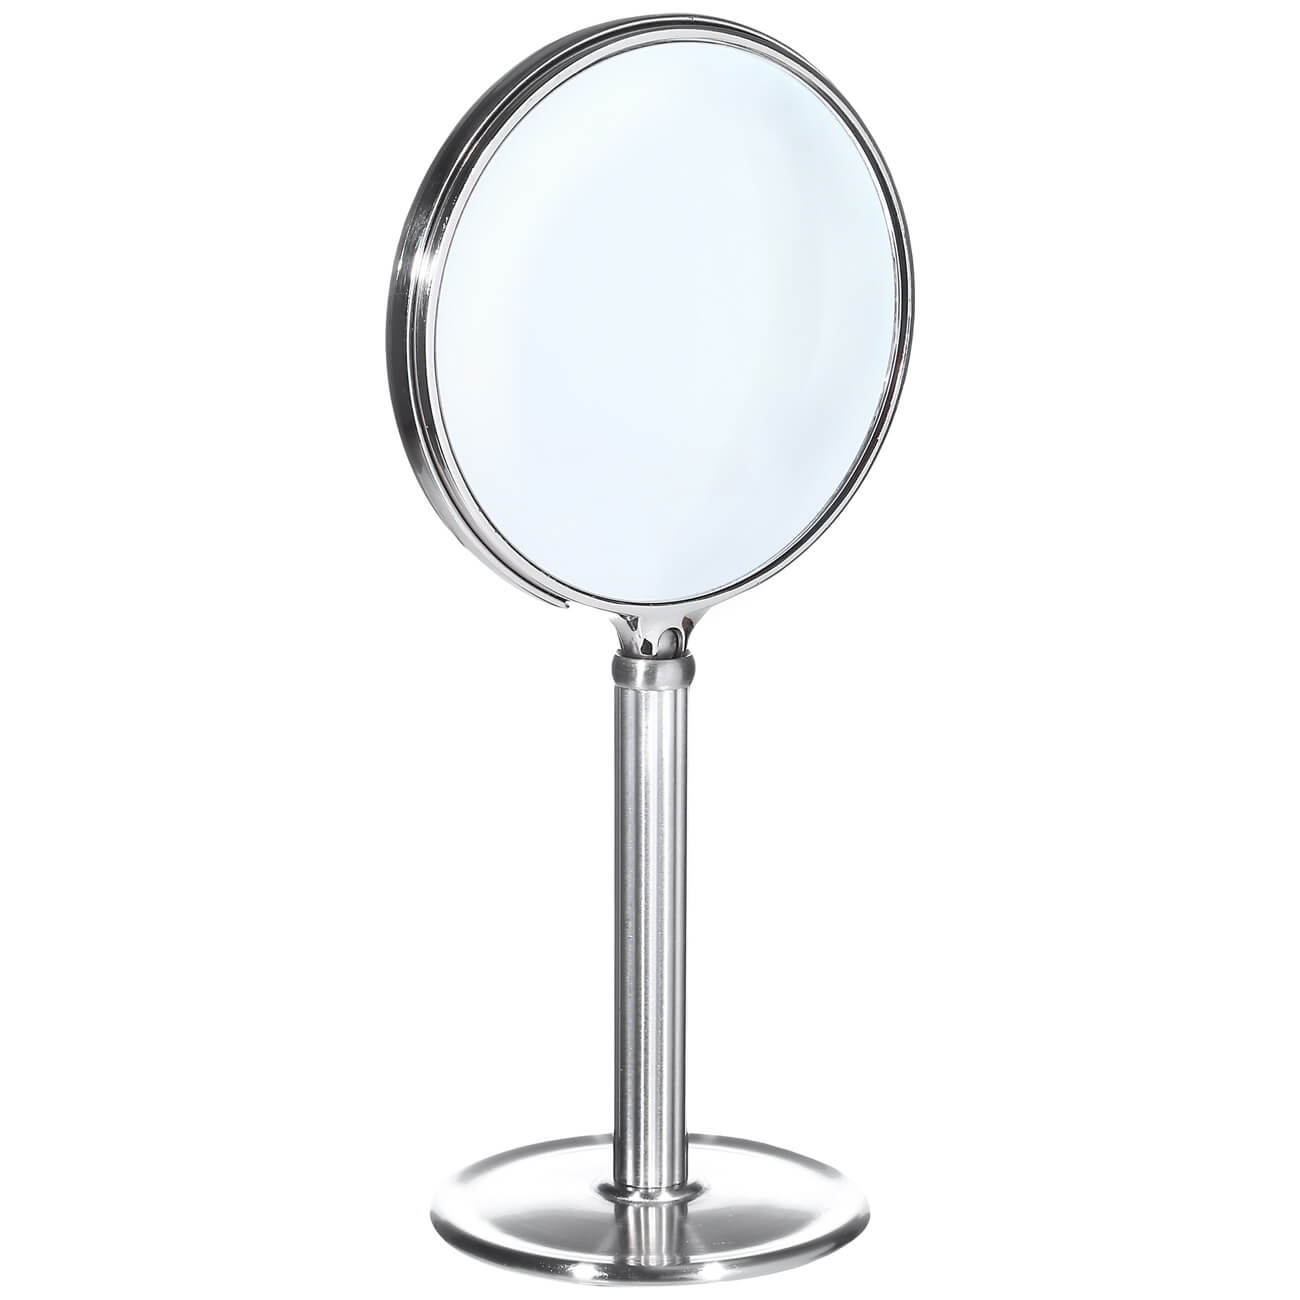 Зеркало настольное, 17 см, двустороннее, на ножке, металл, круглое, Fantastic зеркало двустороннее timo с подсветкой saona 13276 17